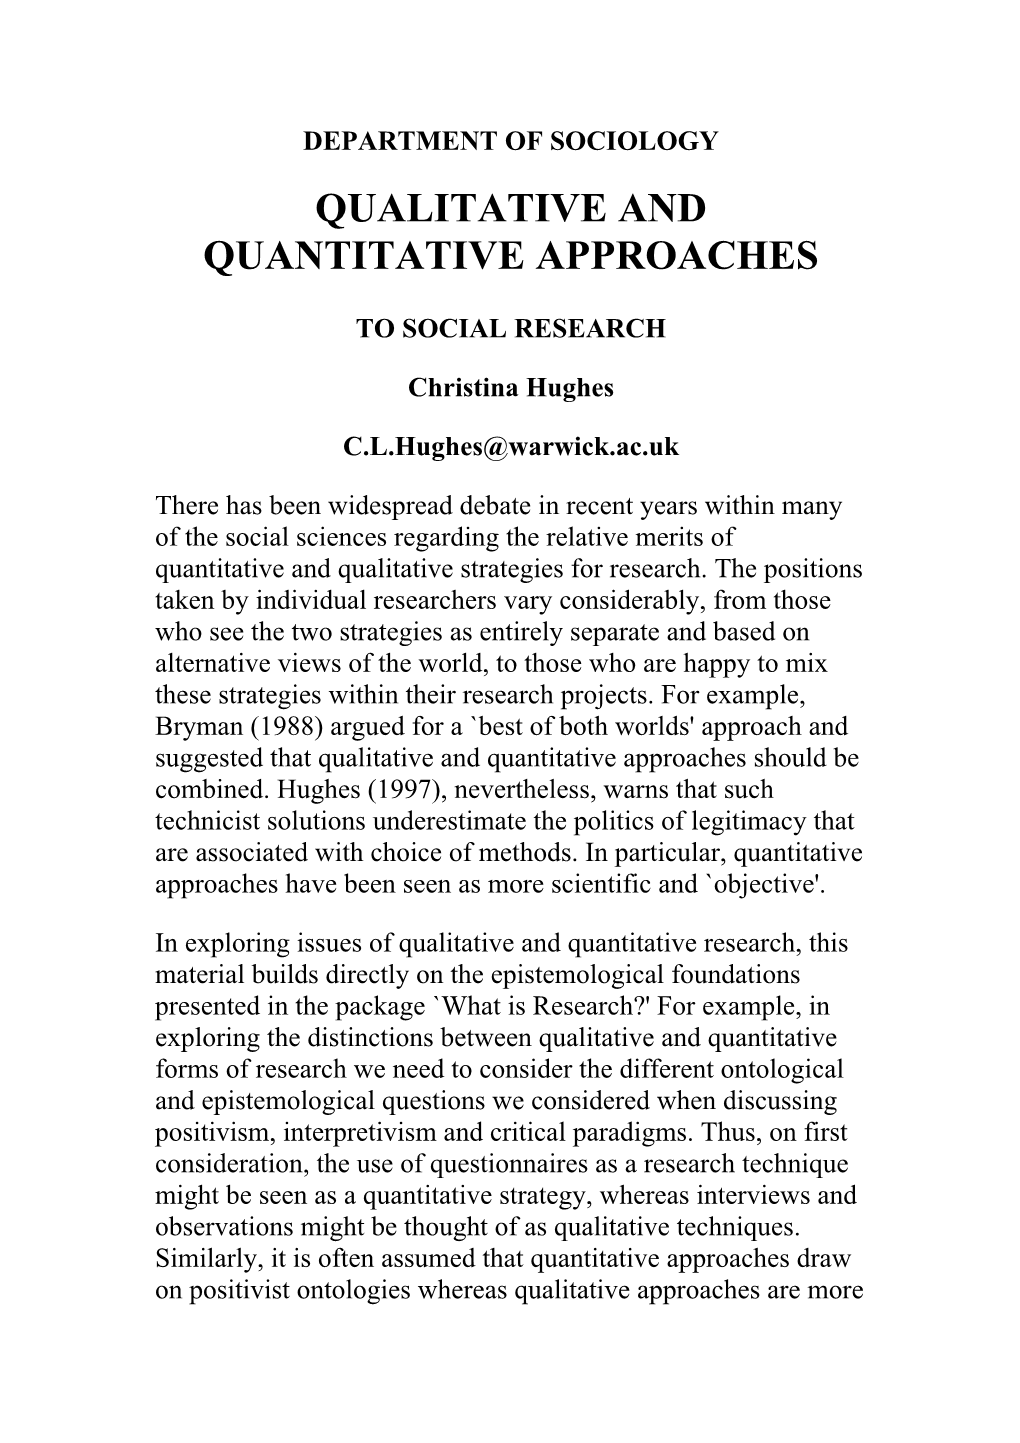 Qualitative and Quantitative Approaches